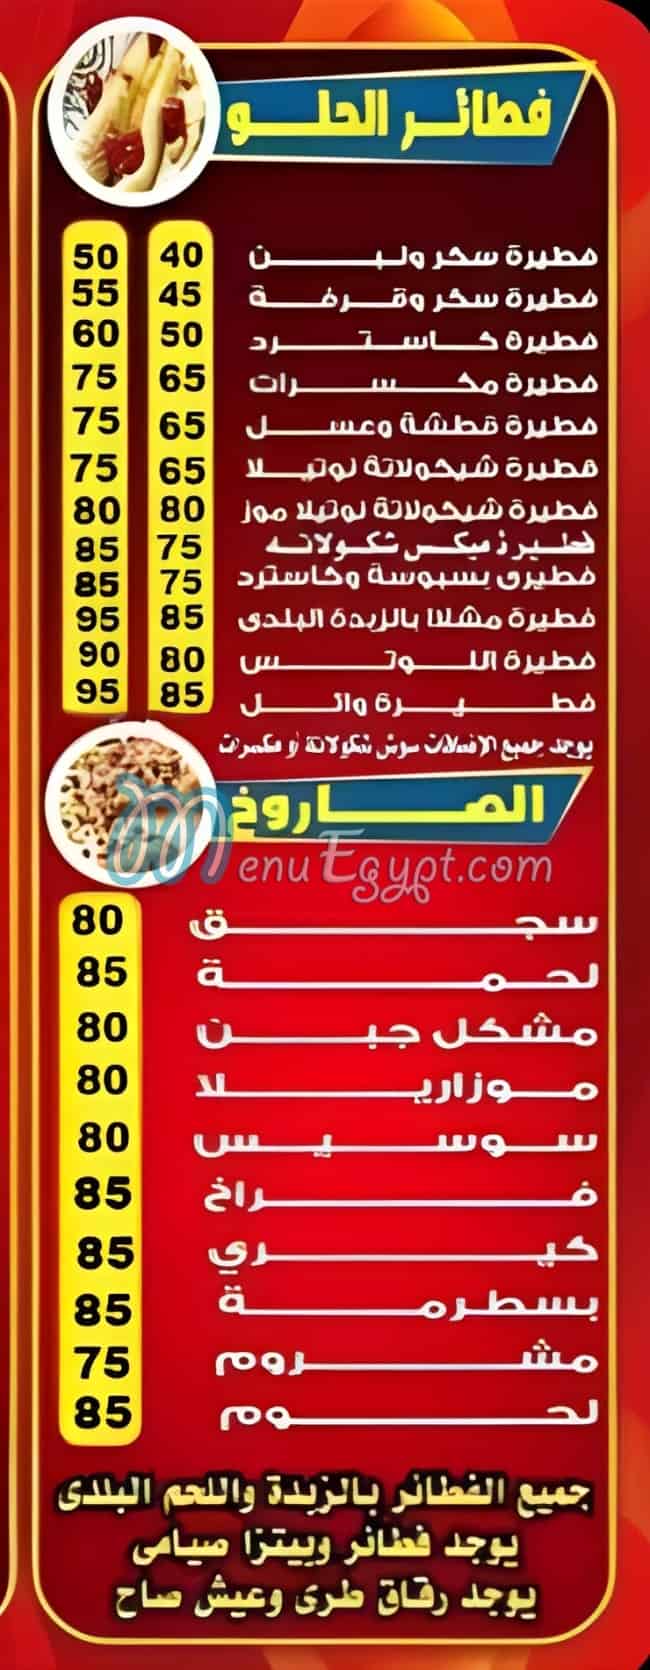 Fatatry Wael menu Egypt 3